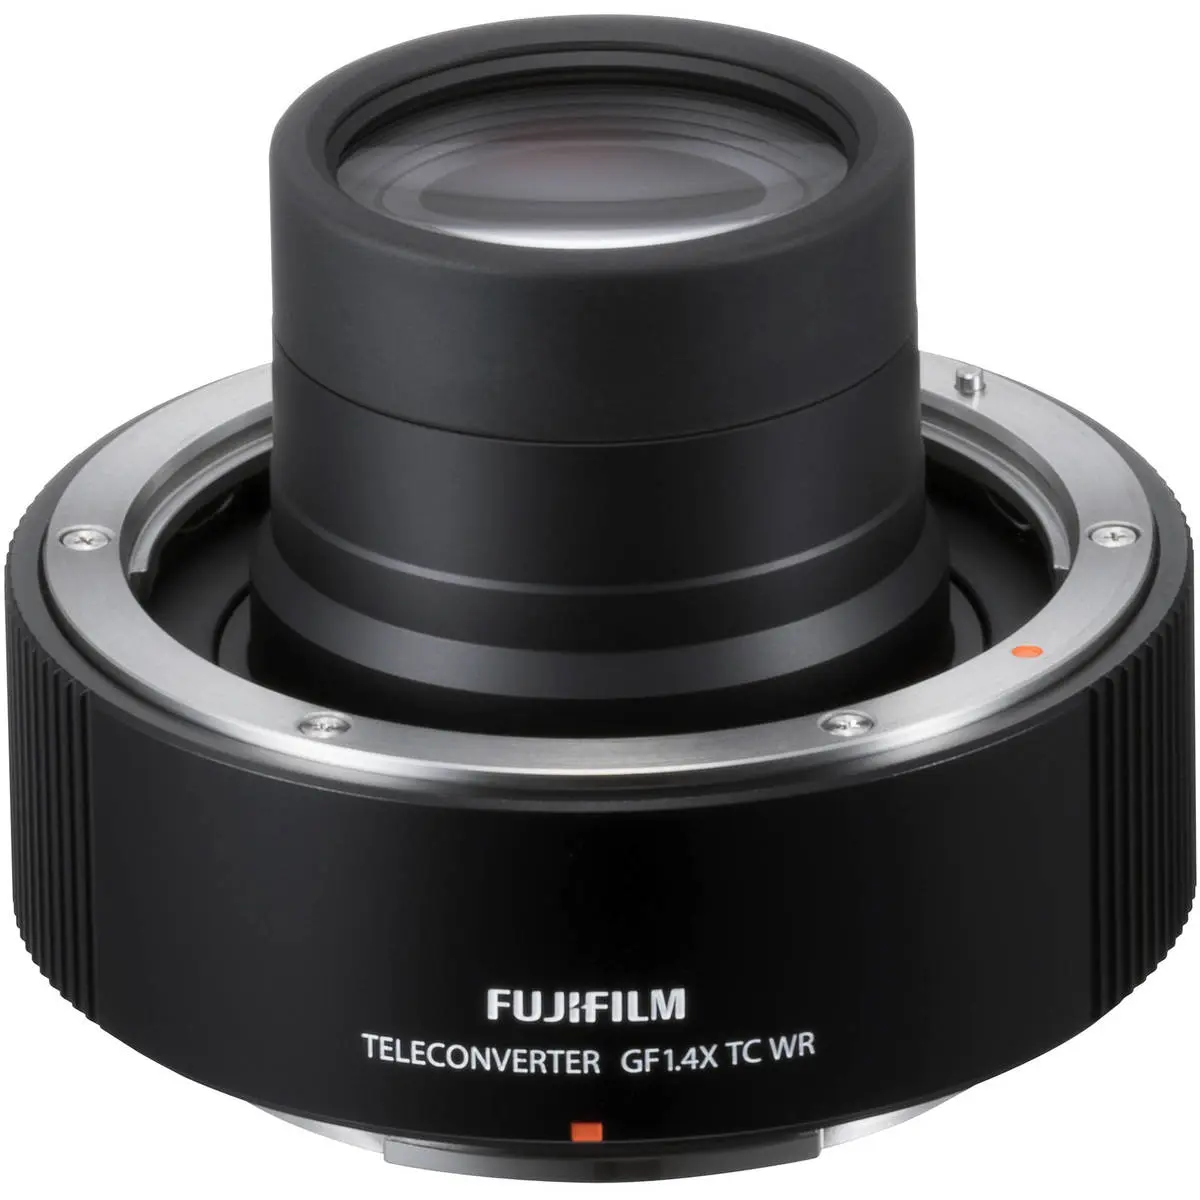 1. Fujifilm FUJINON GF 1.4X TC WR Teleconverter Lens